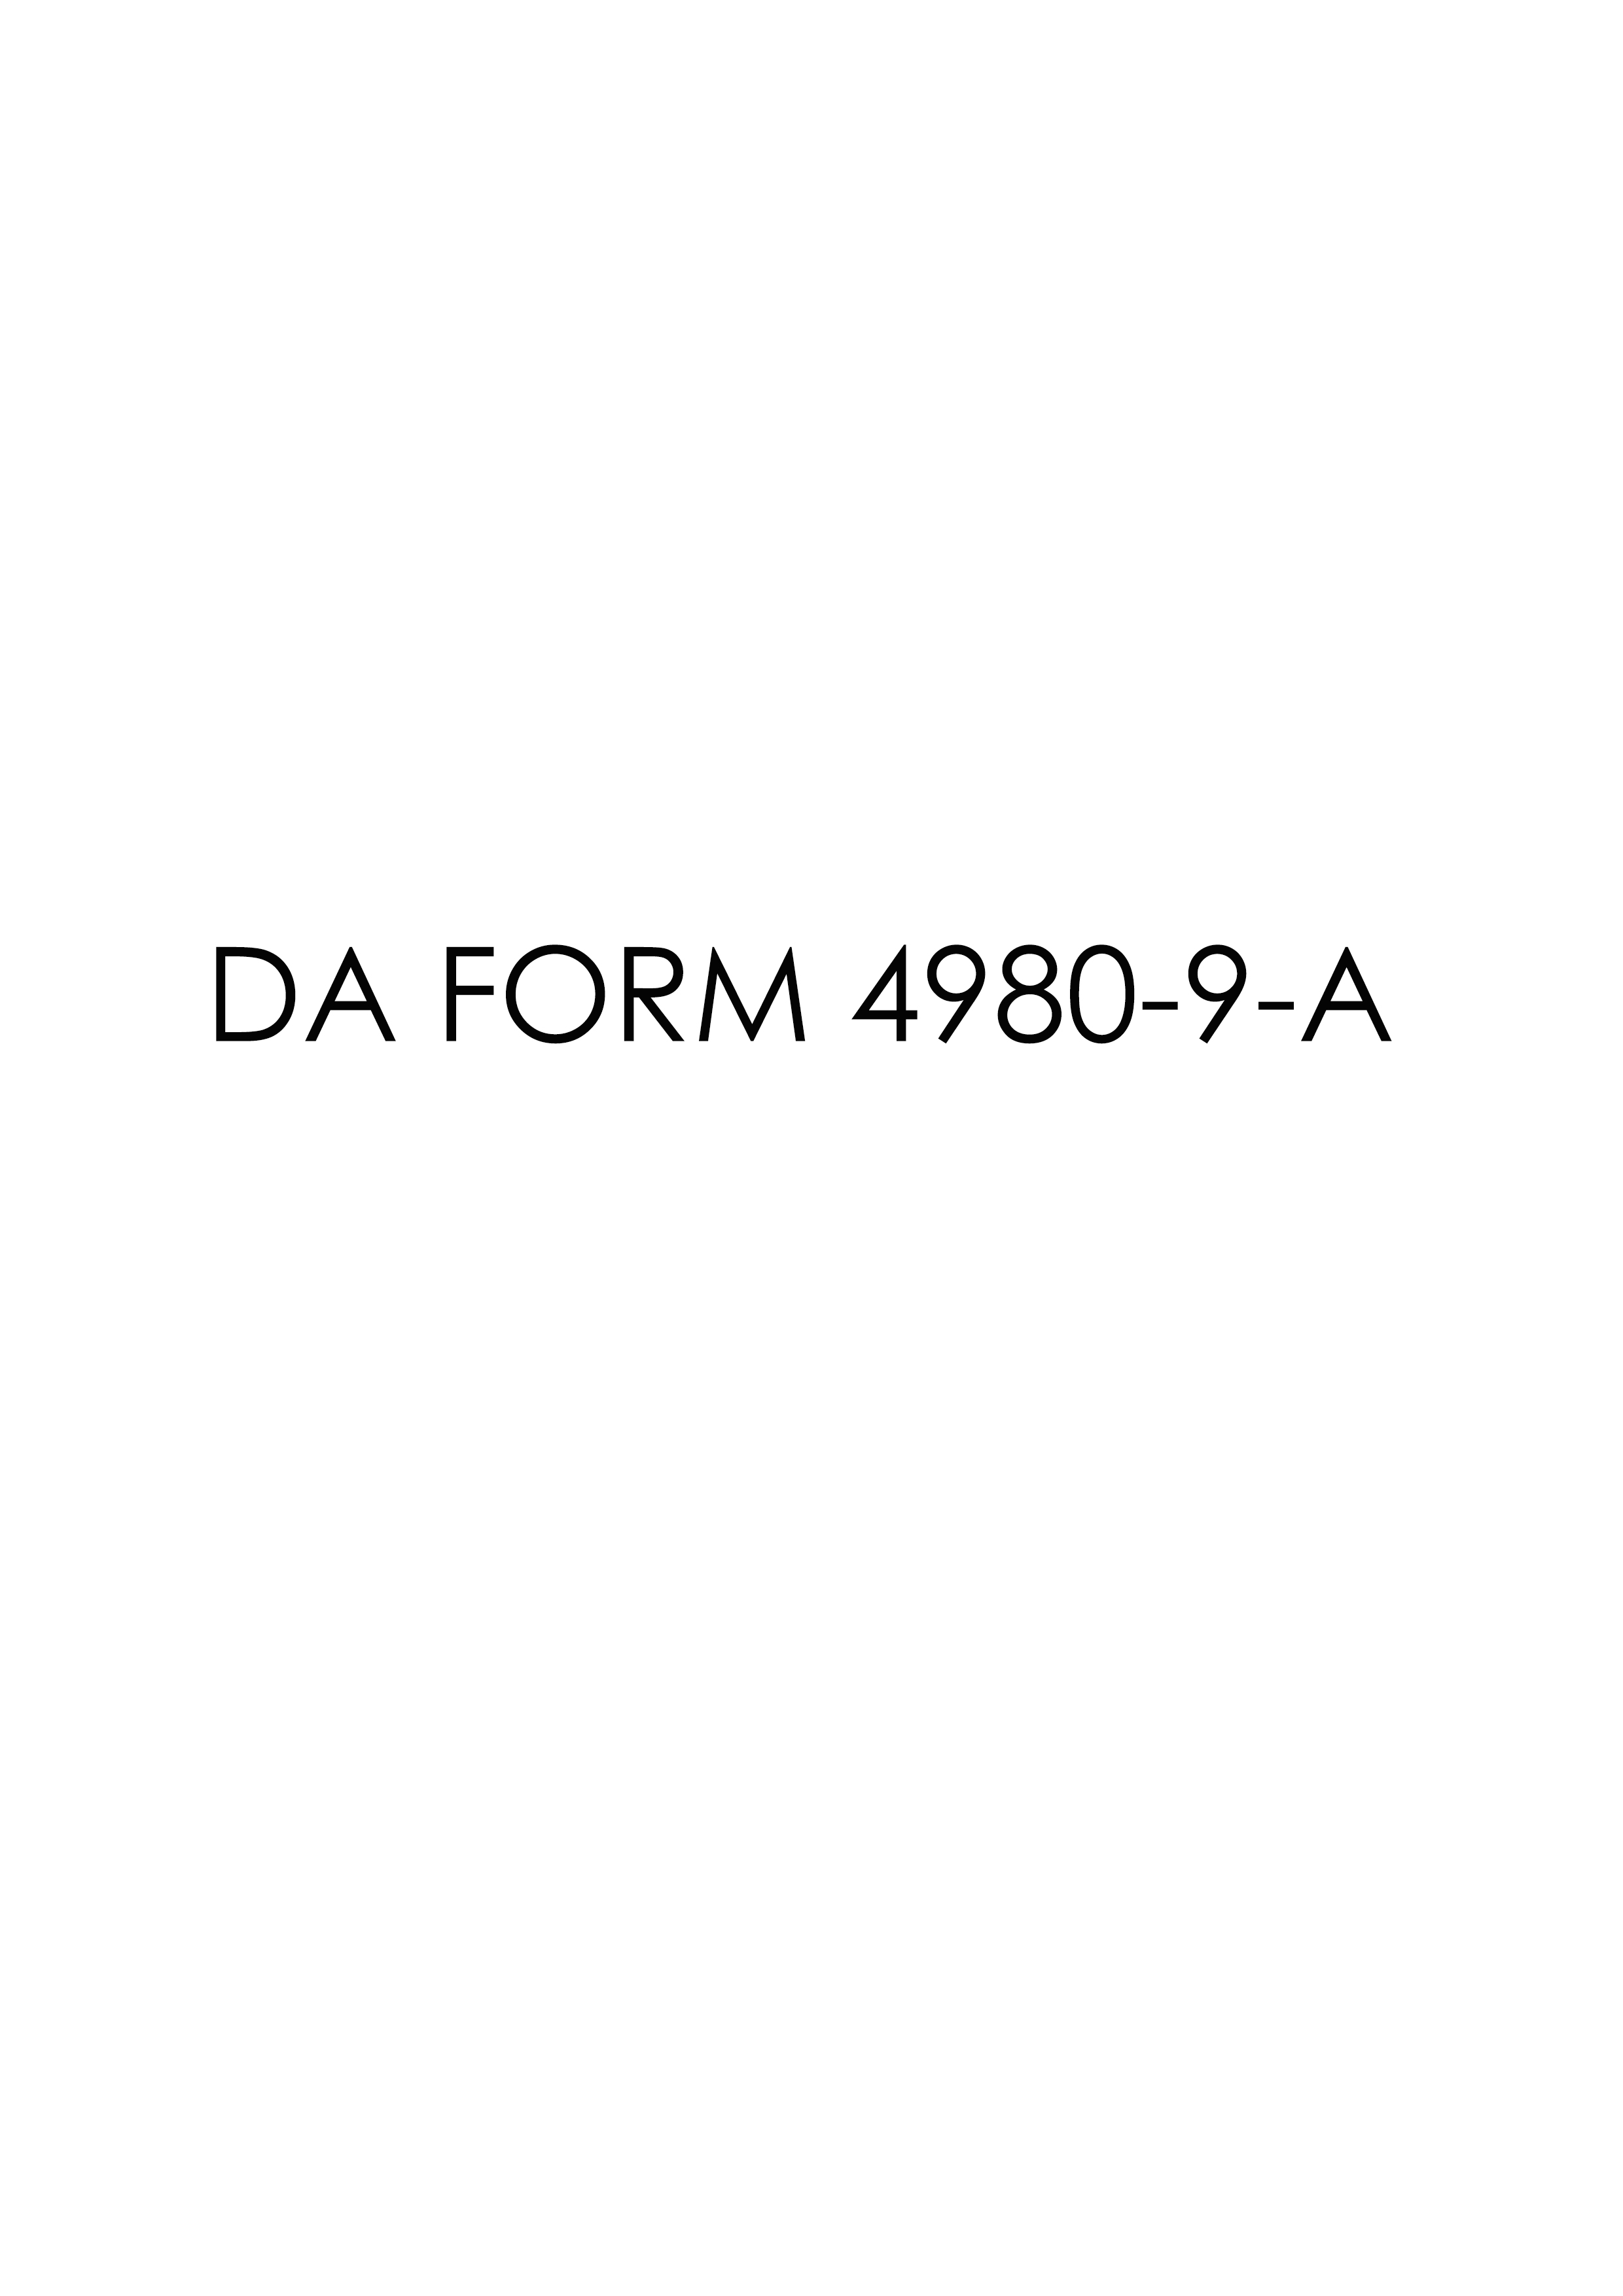 da Form 4980-9-A fillable